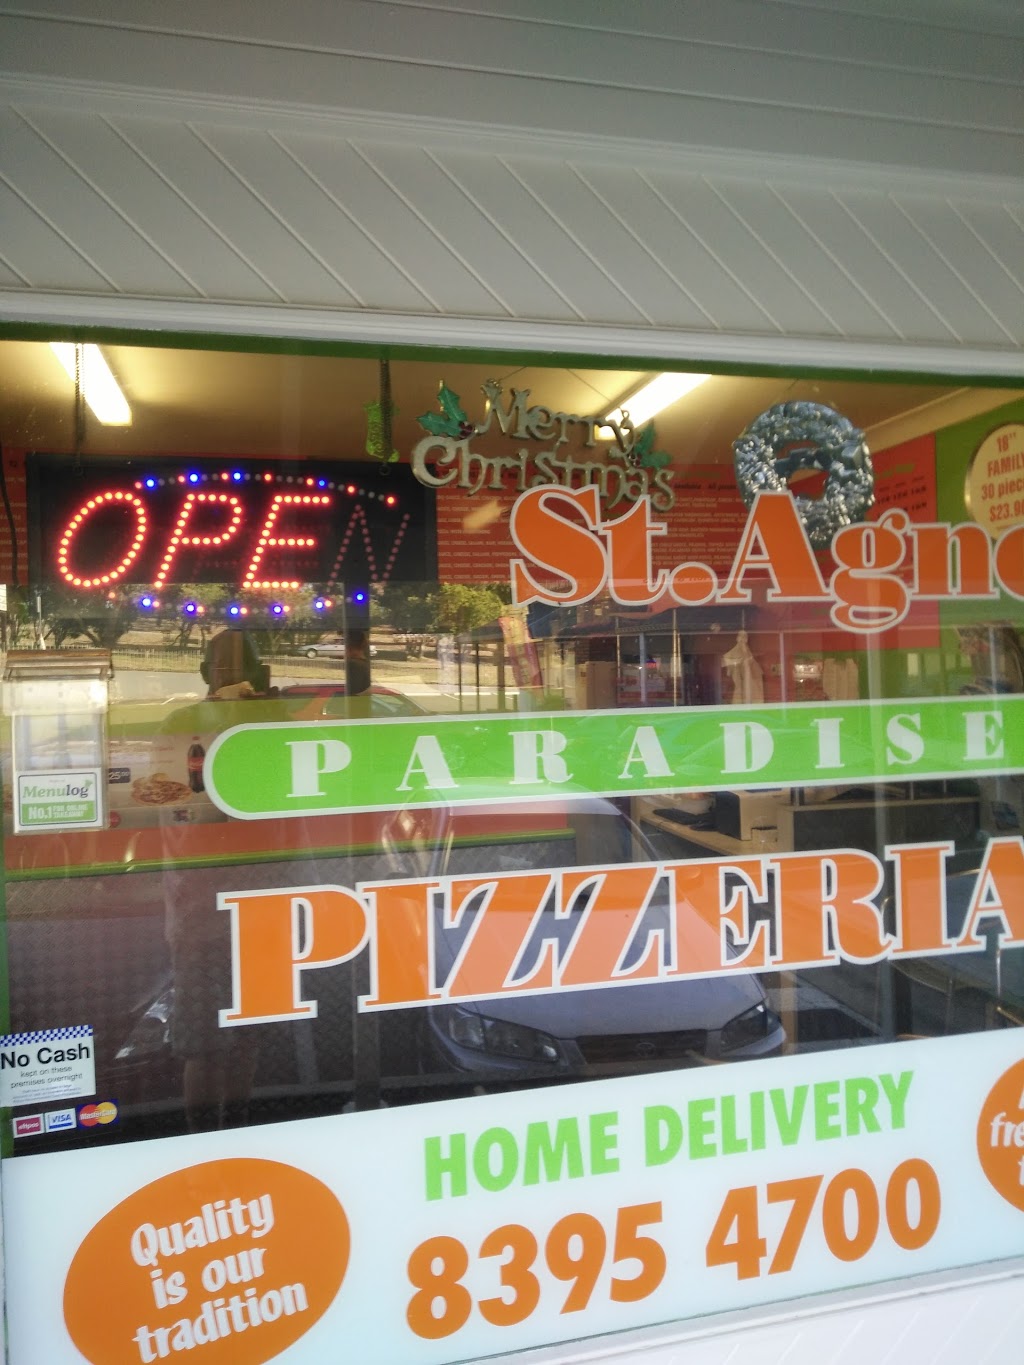 St Agnes Paradise Pizzeria | meal delivery | 9/267-269 Smart Rd, St Agnes SA 5097, Australia | 0883954700 OR +61 8 8395 4700